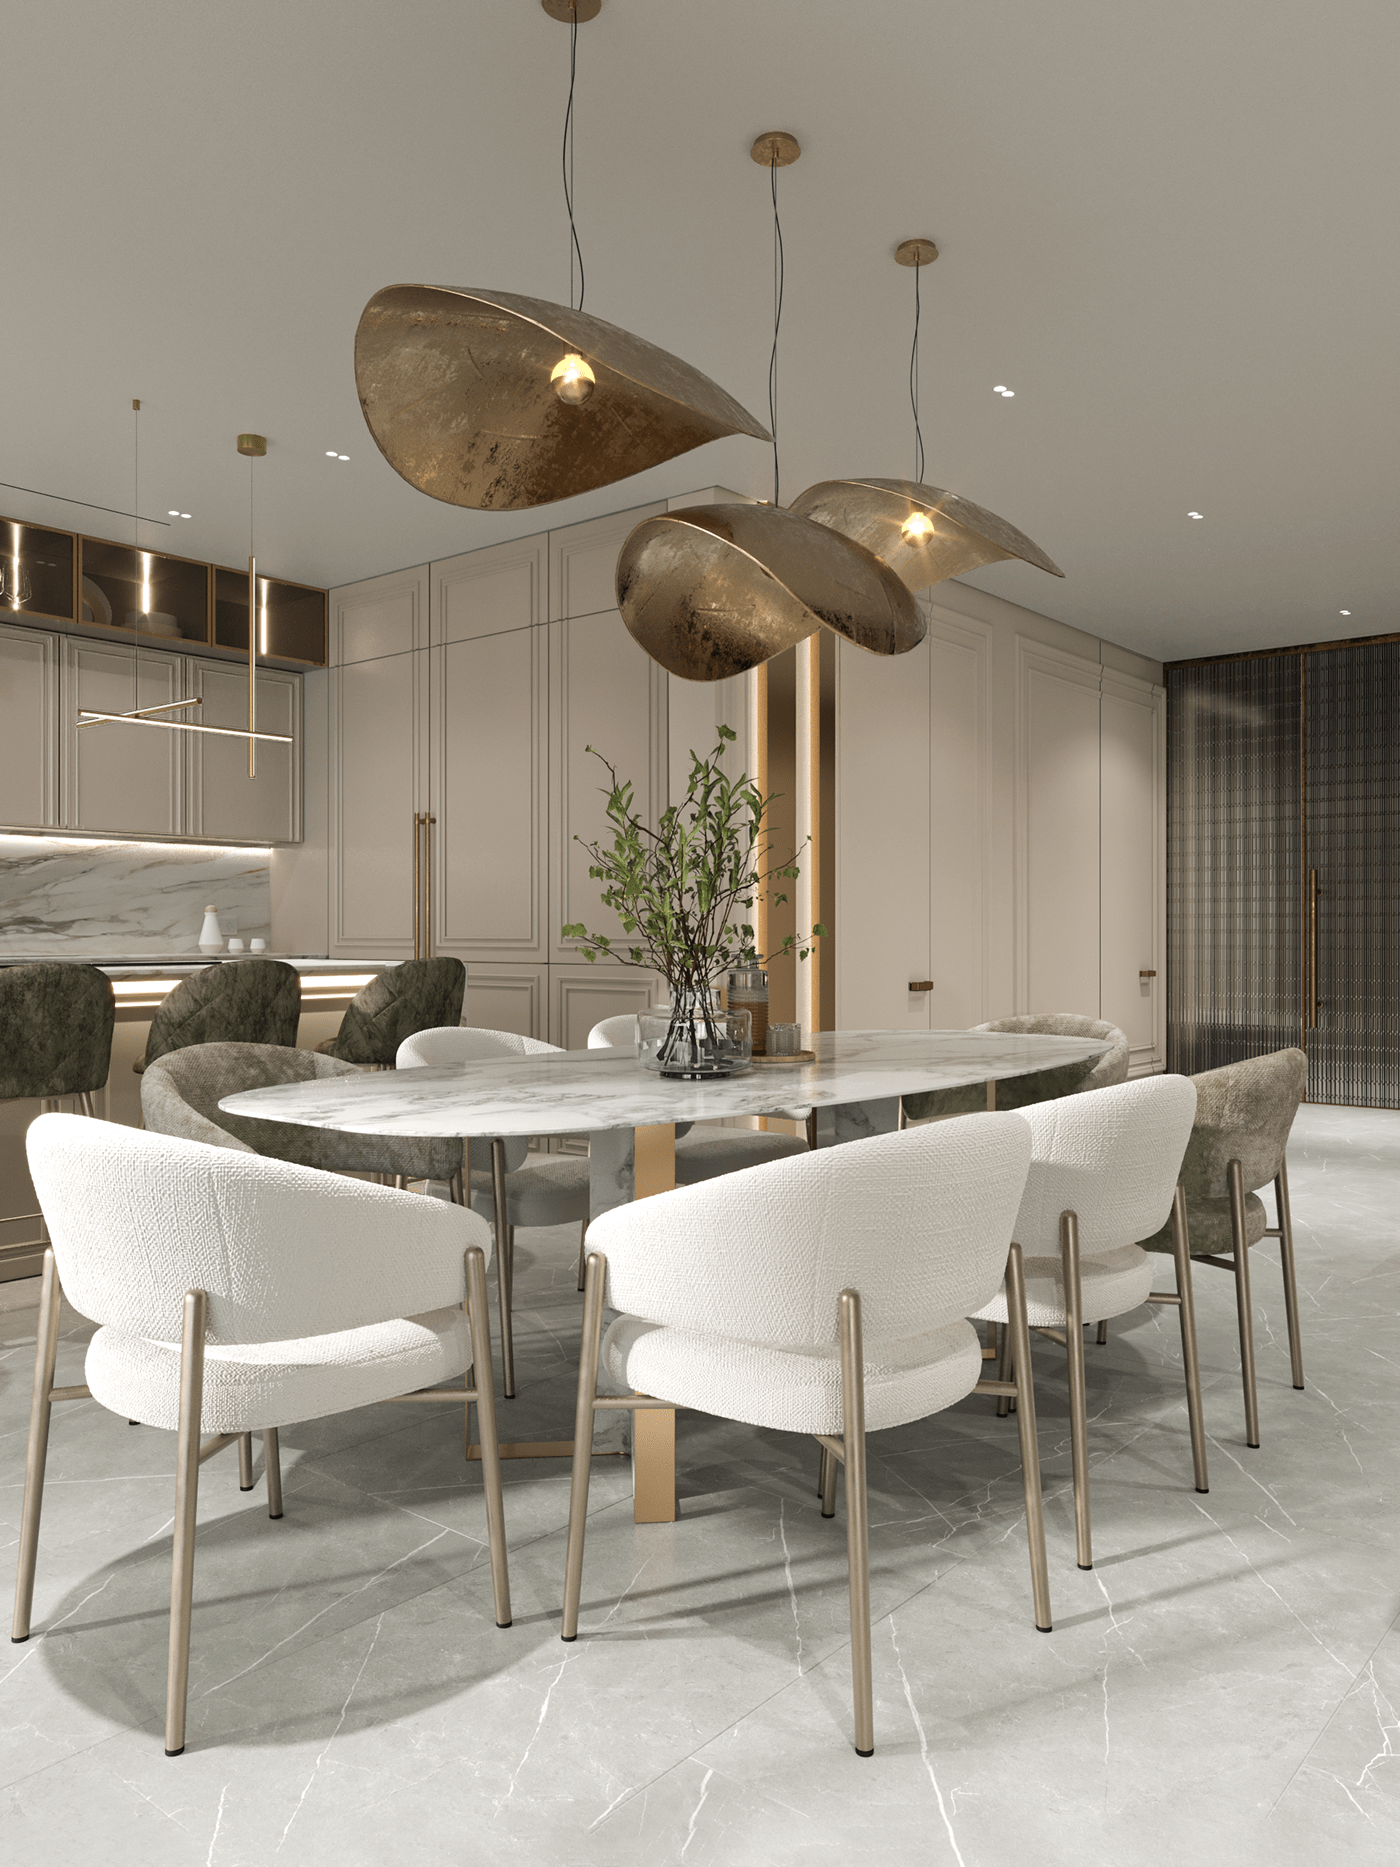 design Interior living room kitchen 3ds max visualization modern archviz 3D